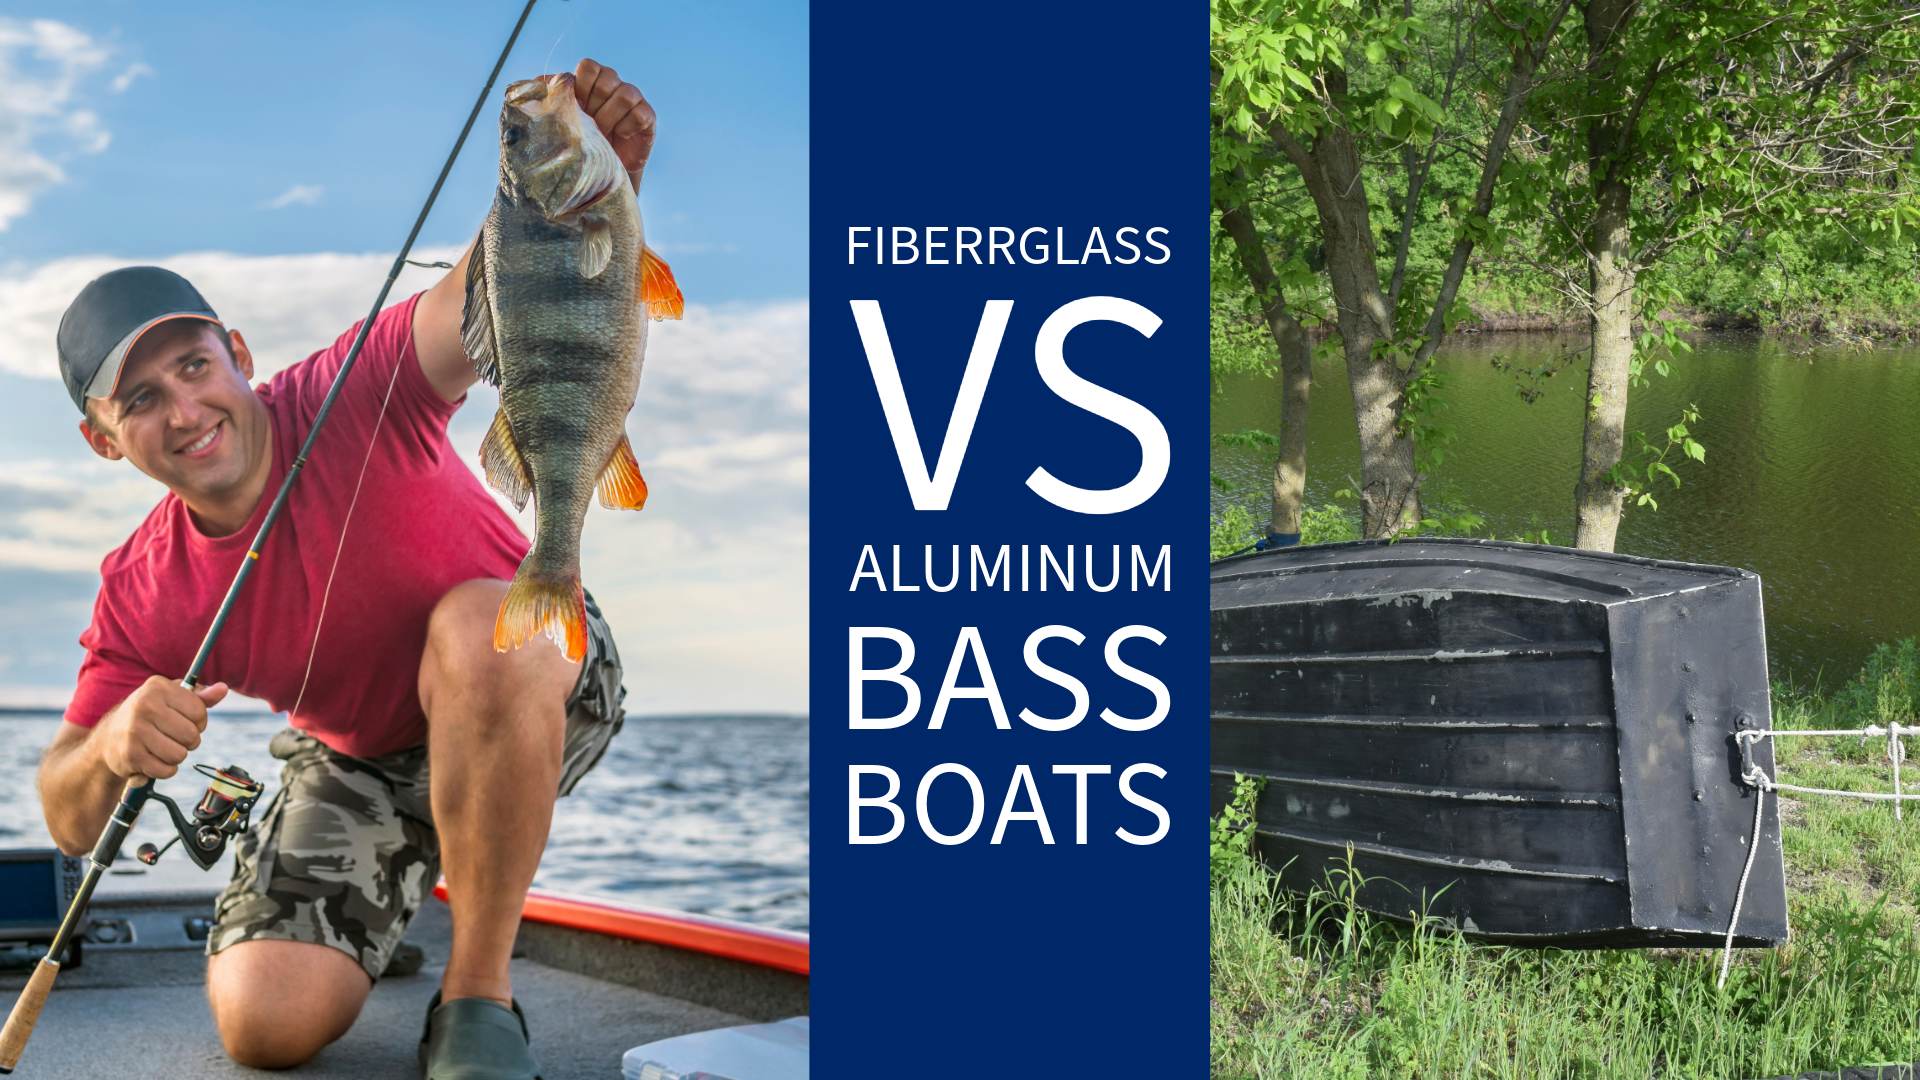 Fiberglass vs Aluminum Bass Boats